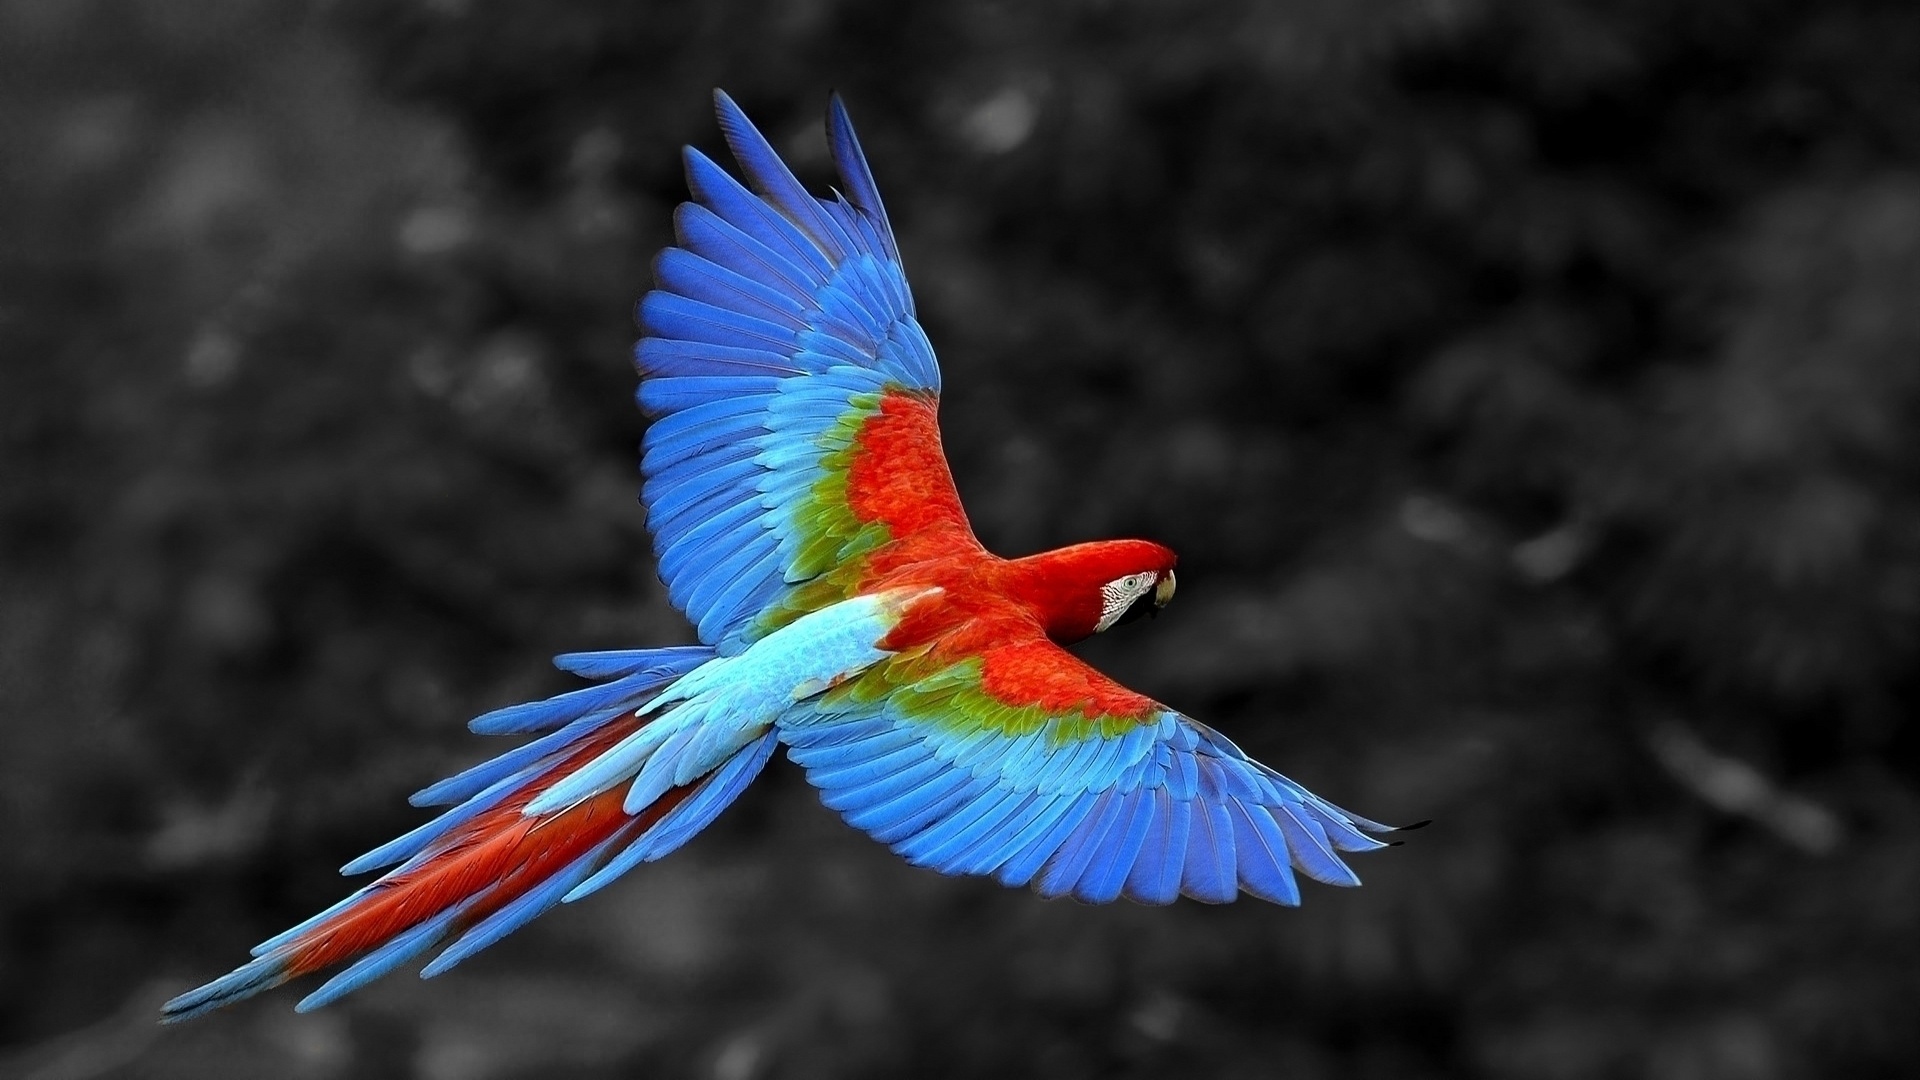 colorful parrot image wallpaper